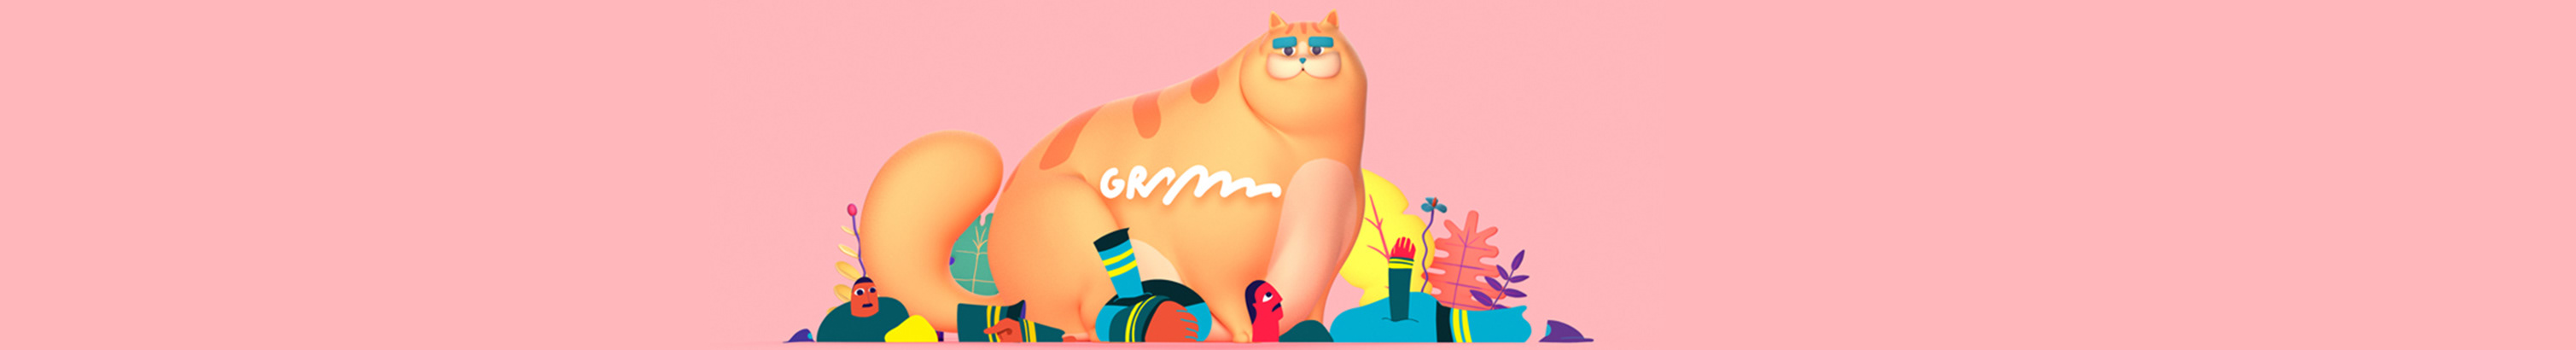 GRAMM Studio's profile banner